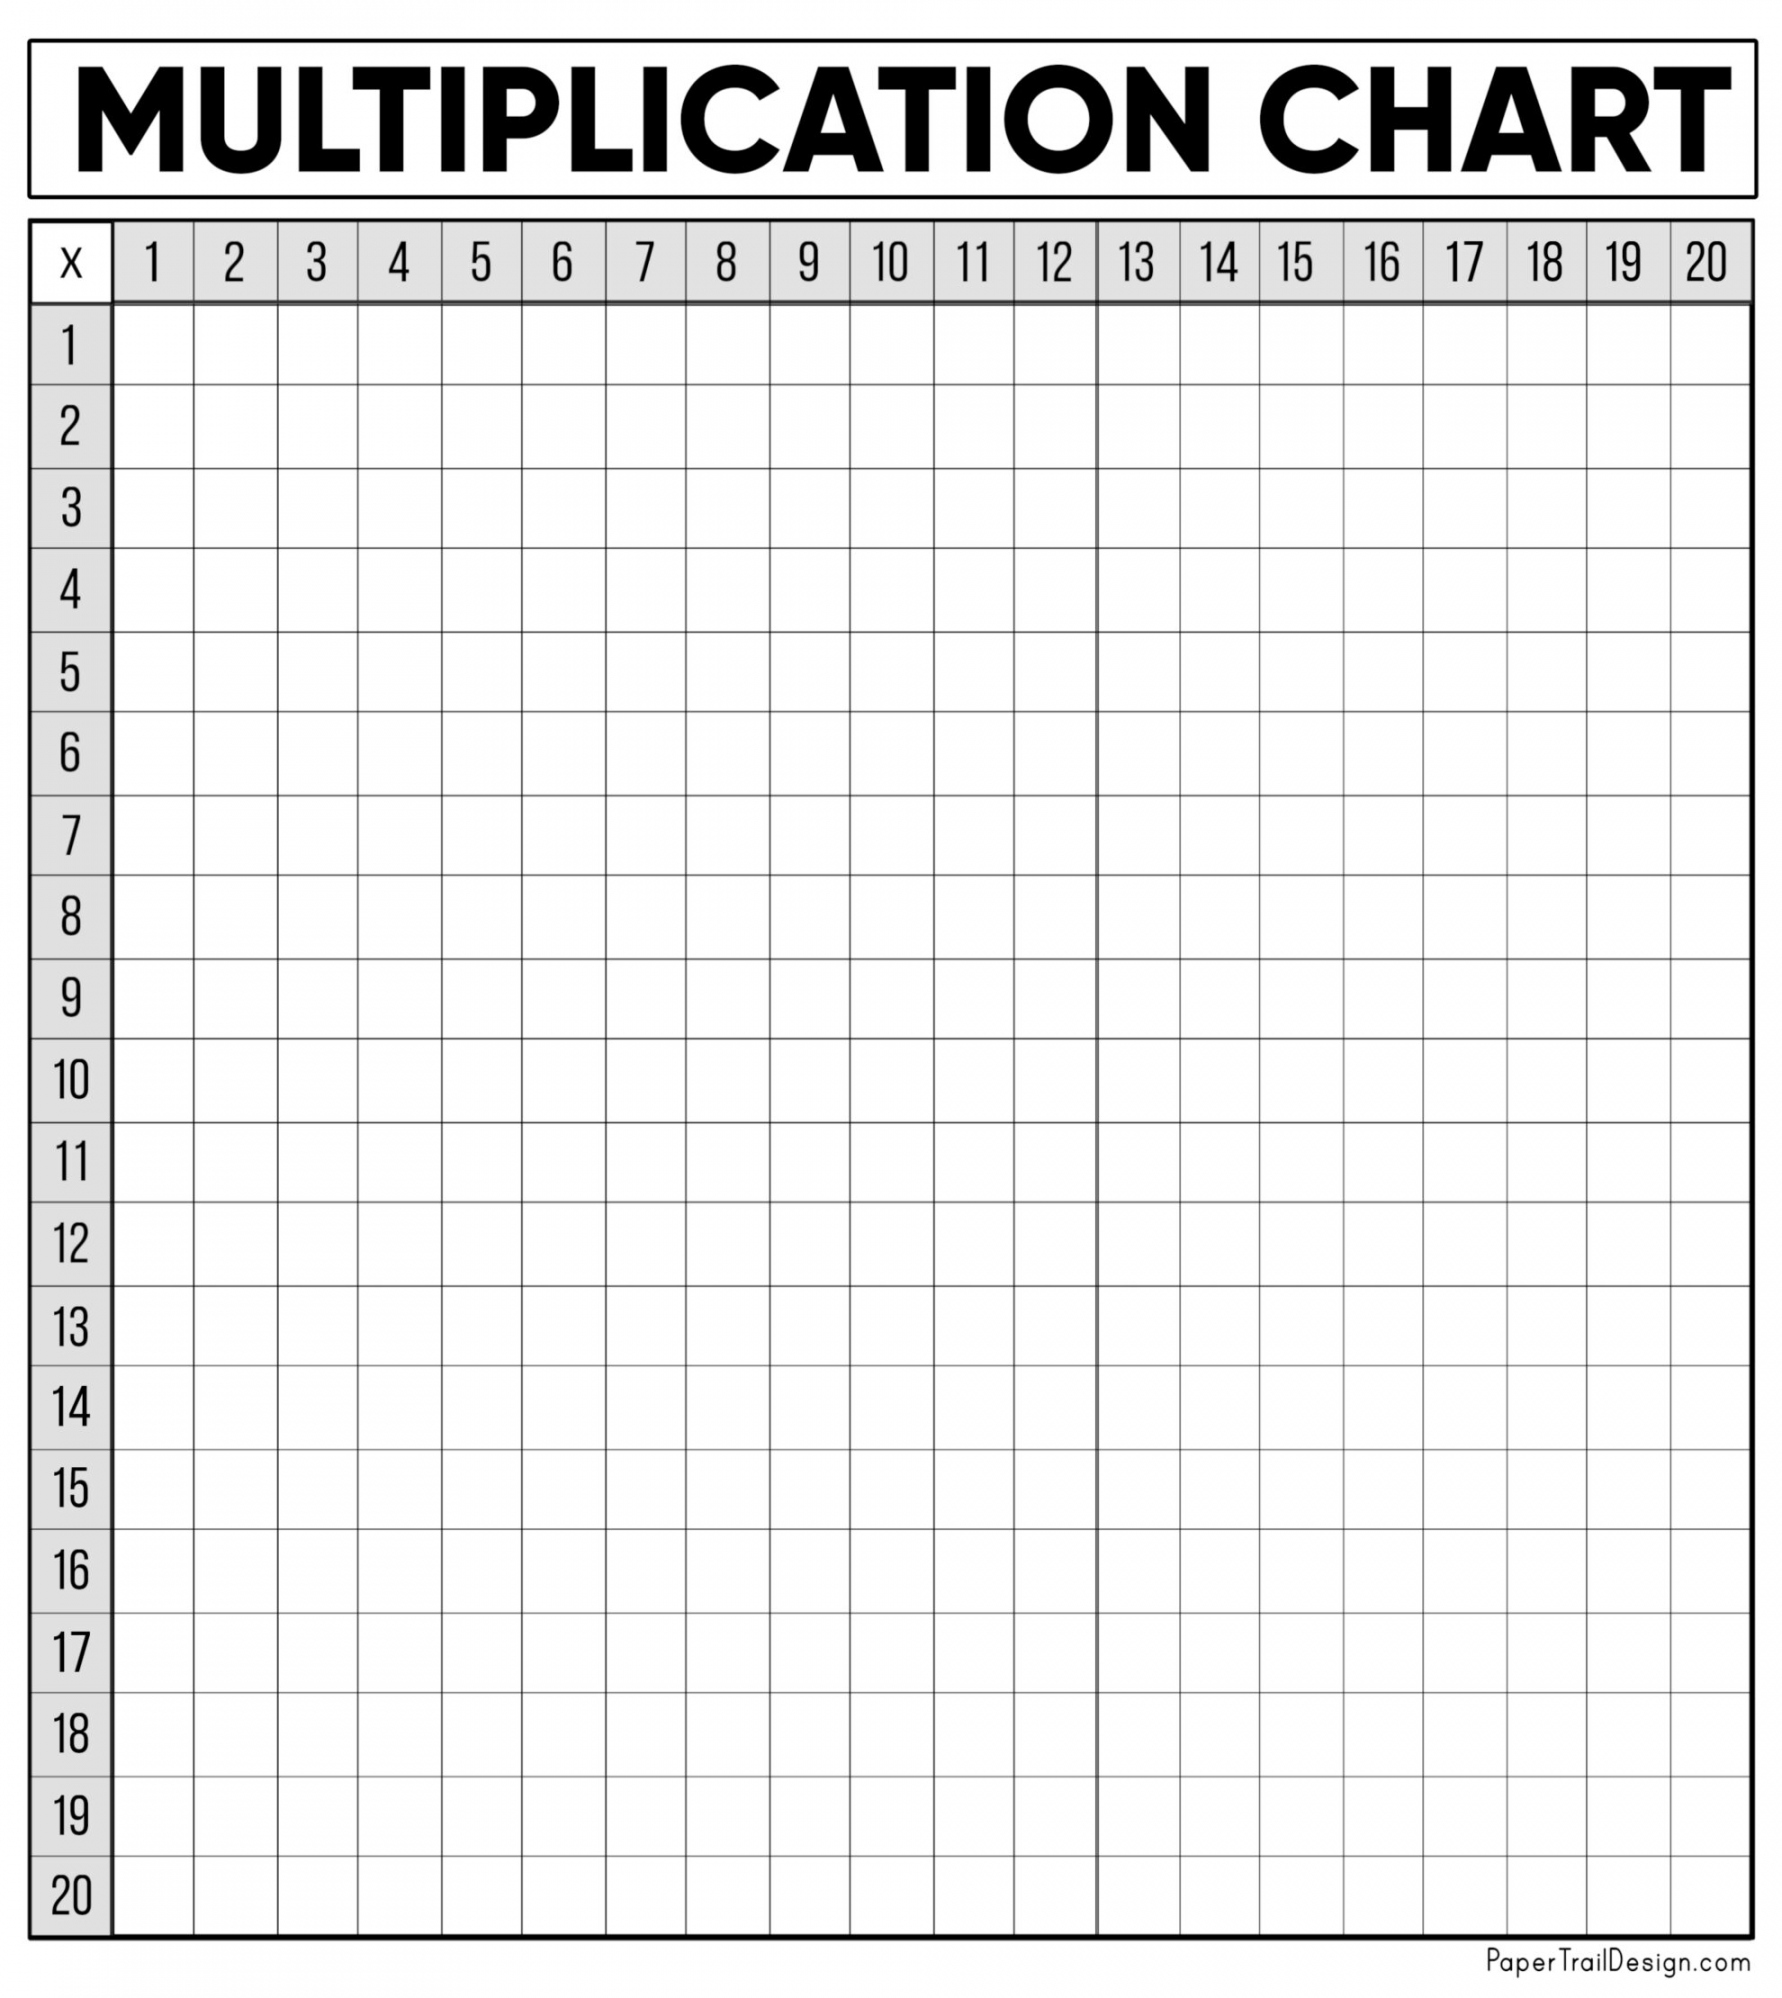 Free Multiplication Chart Printable - Paper Trail Design - FREE Printables - Blank Multiplication Table Printable